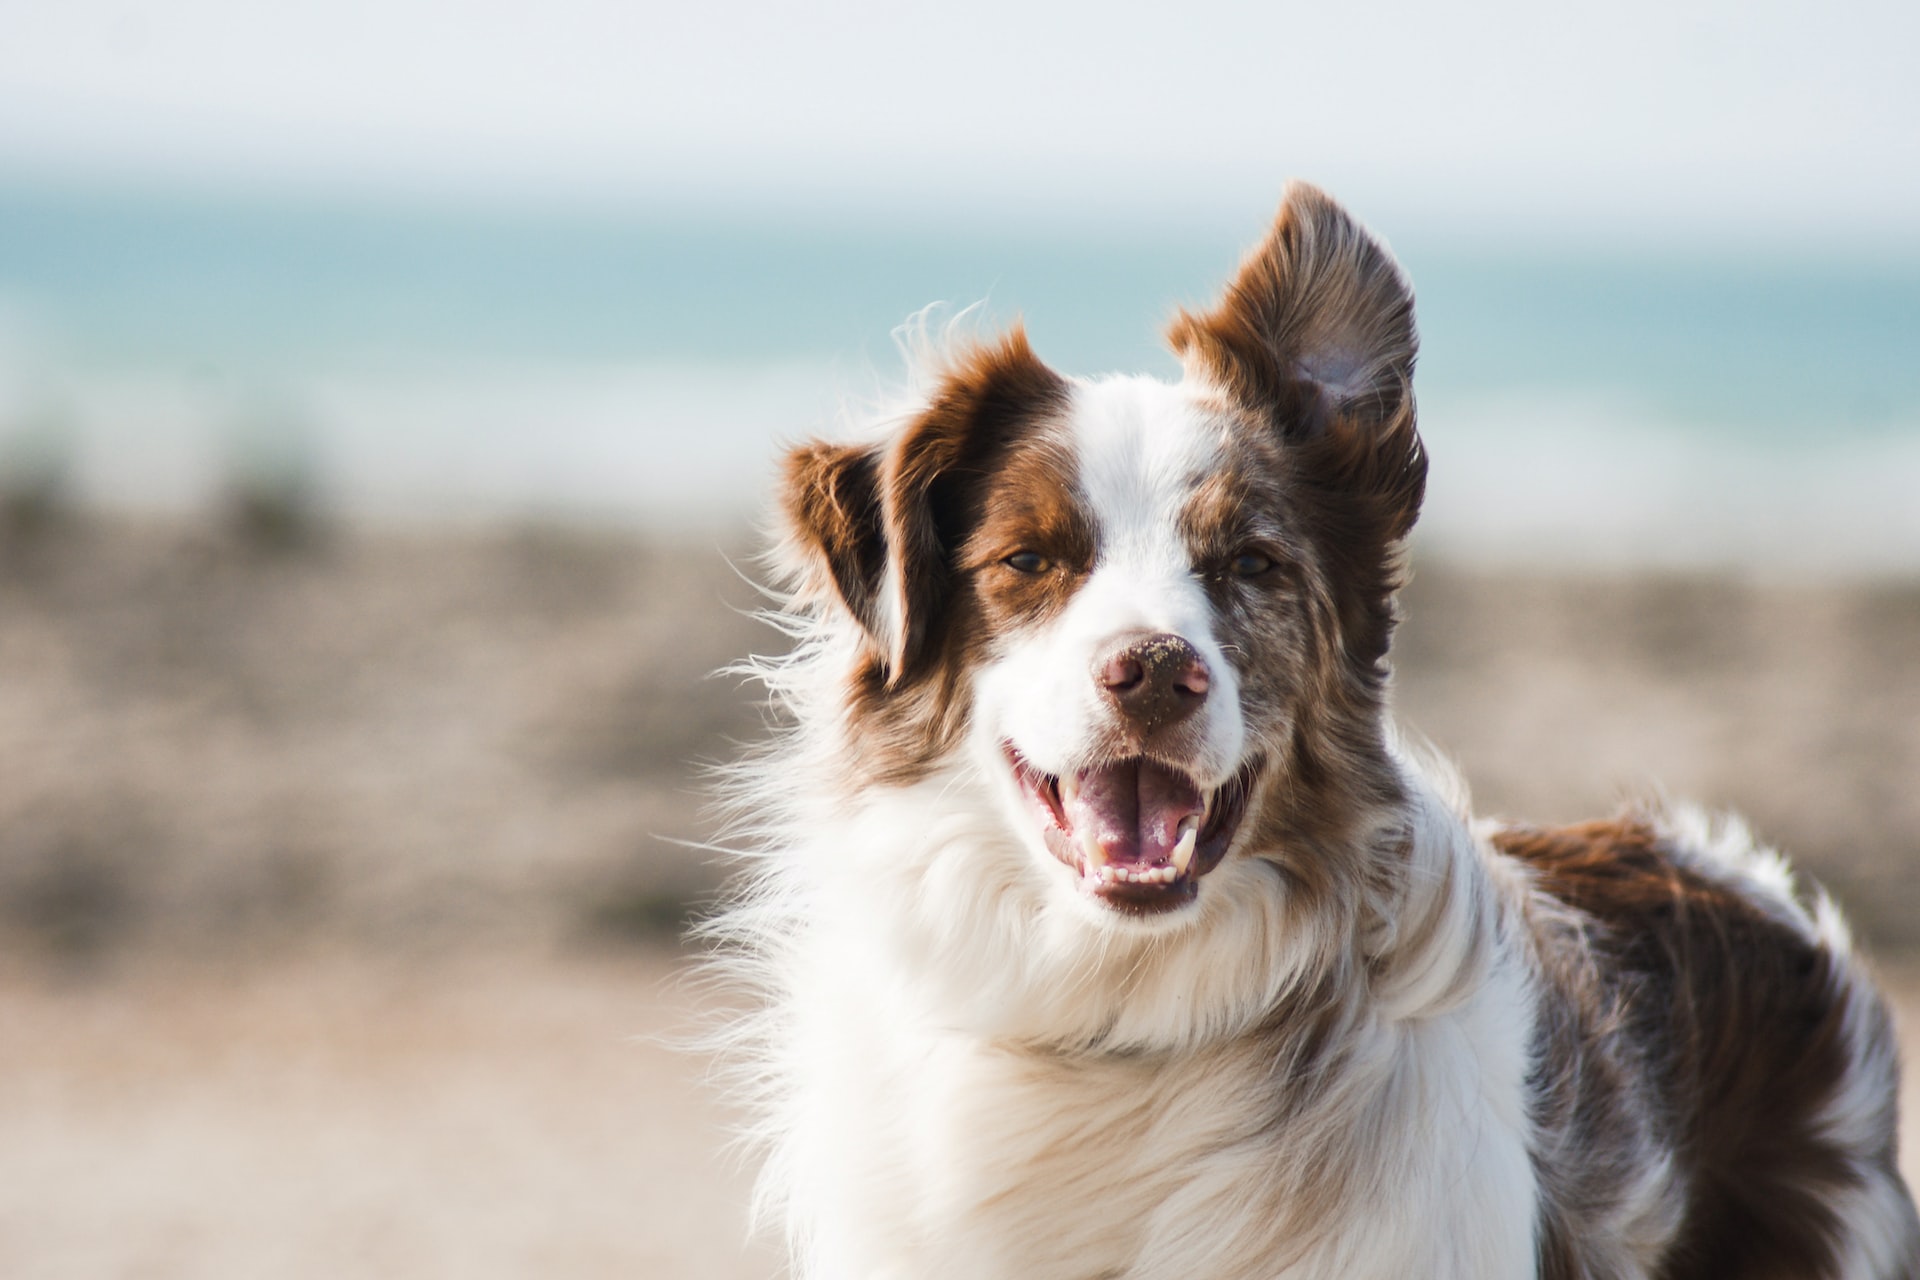 Coronavirus quarantine: How to keep your dogs occupied in isolation